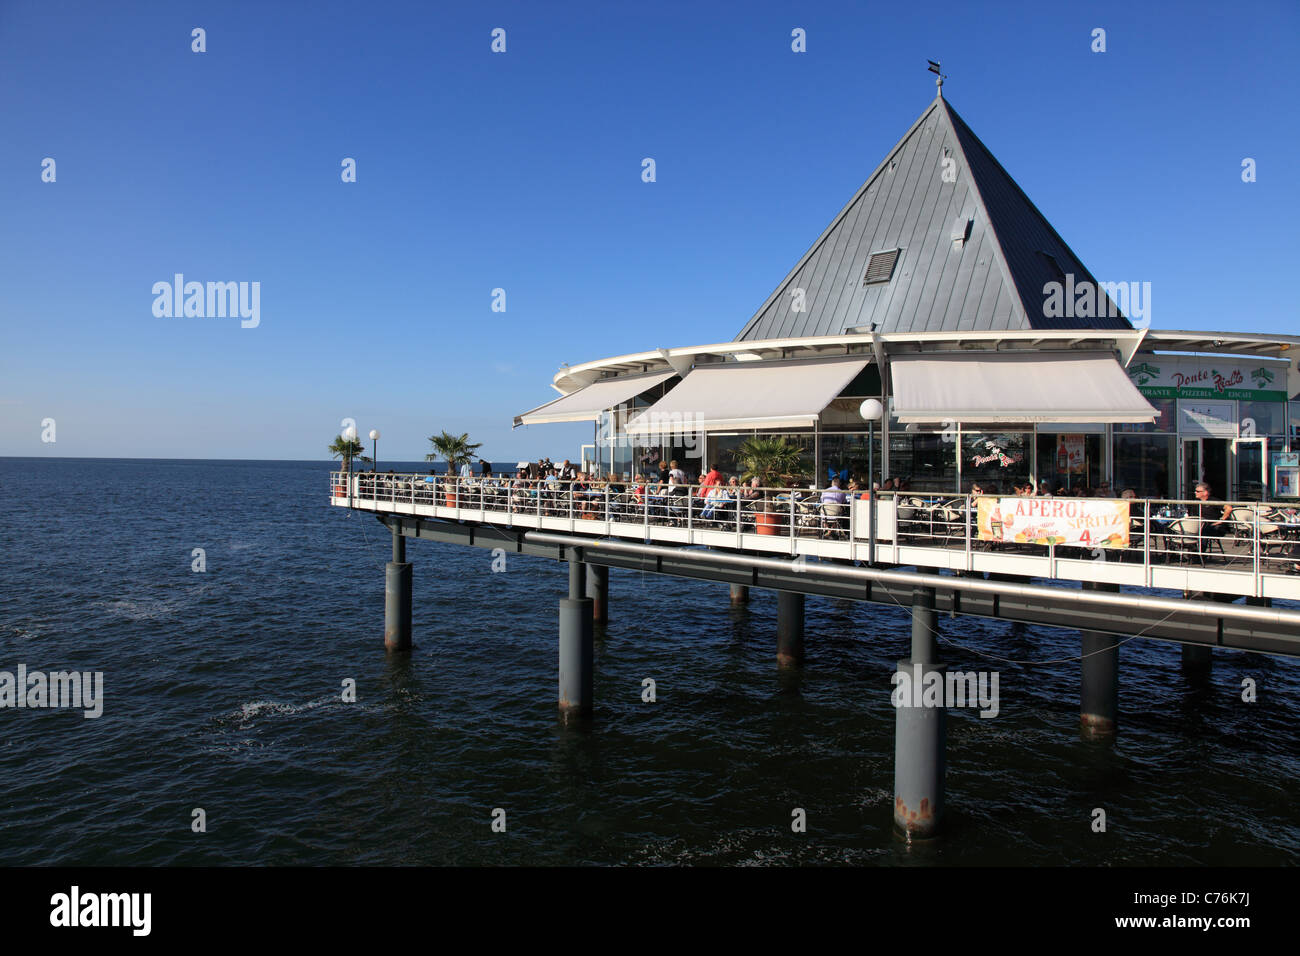 restaurant at the pier of Heringsdorf, Usedom, Mecklenburg Vorpommern, Germany. Photo by Willy Matheisl Stock Photo